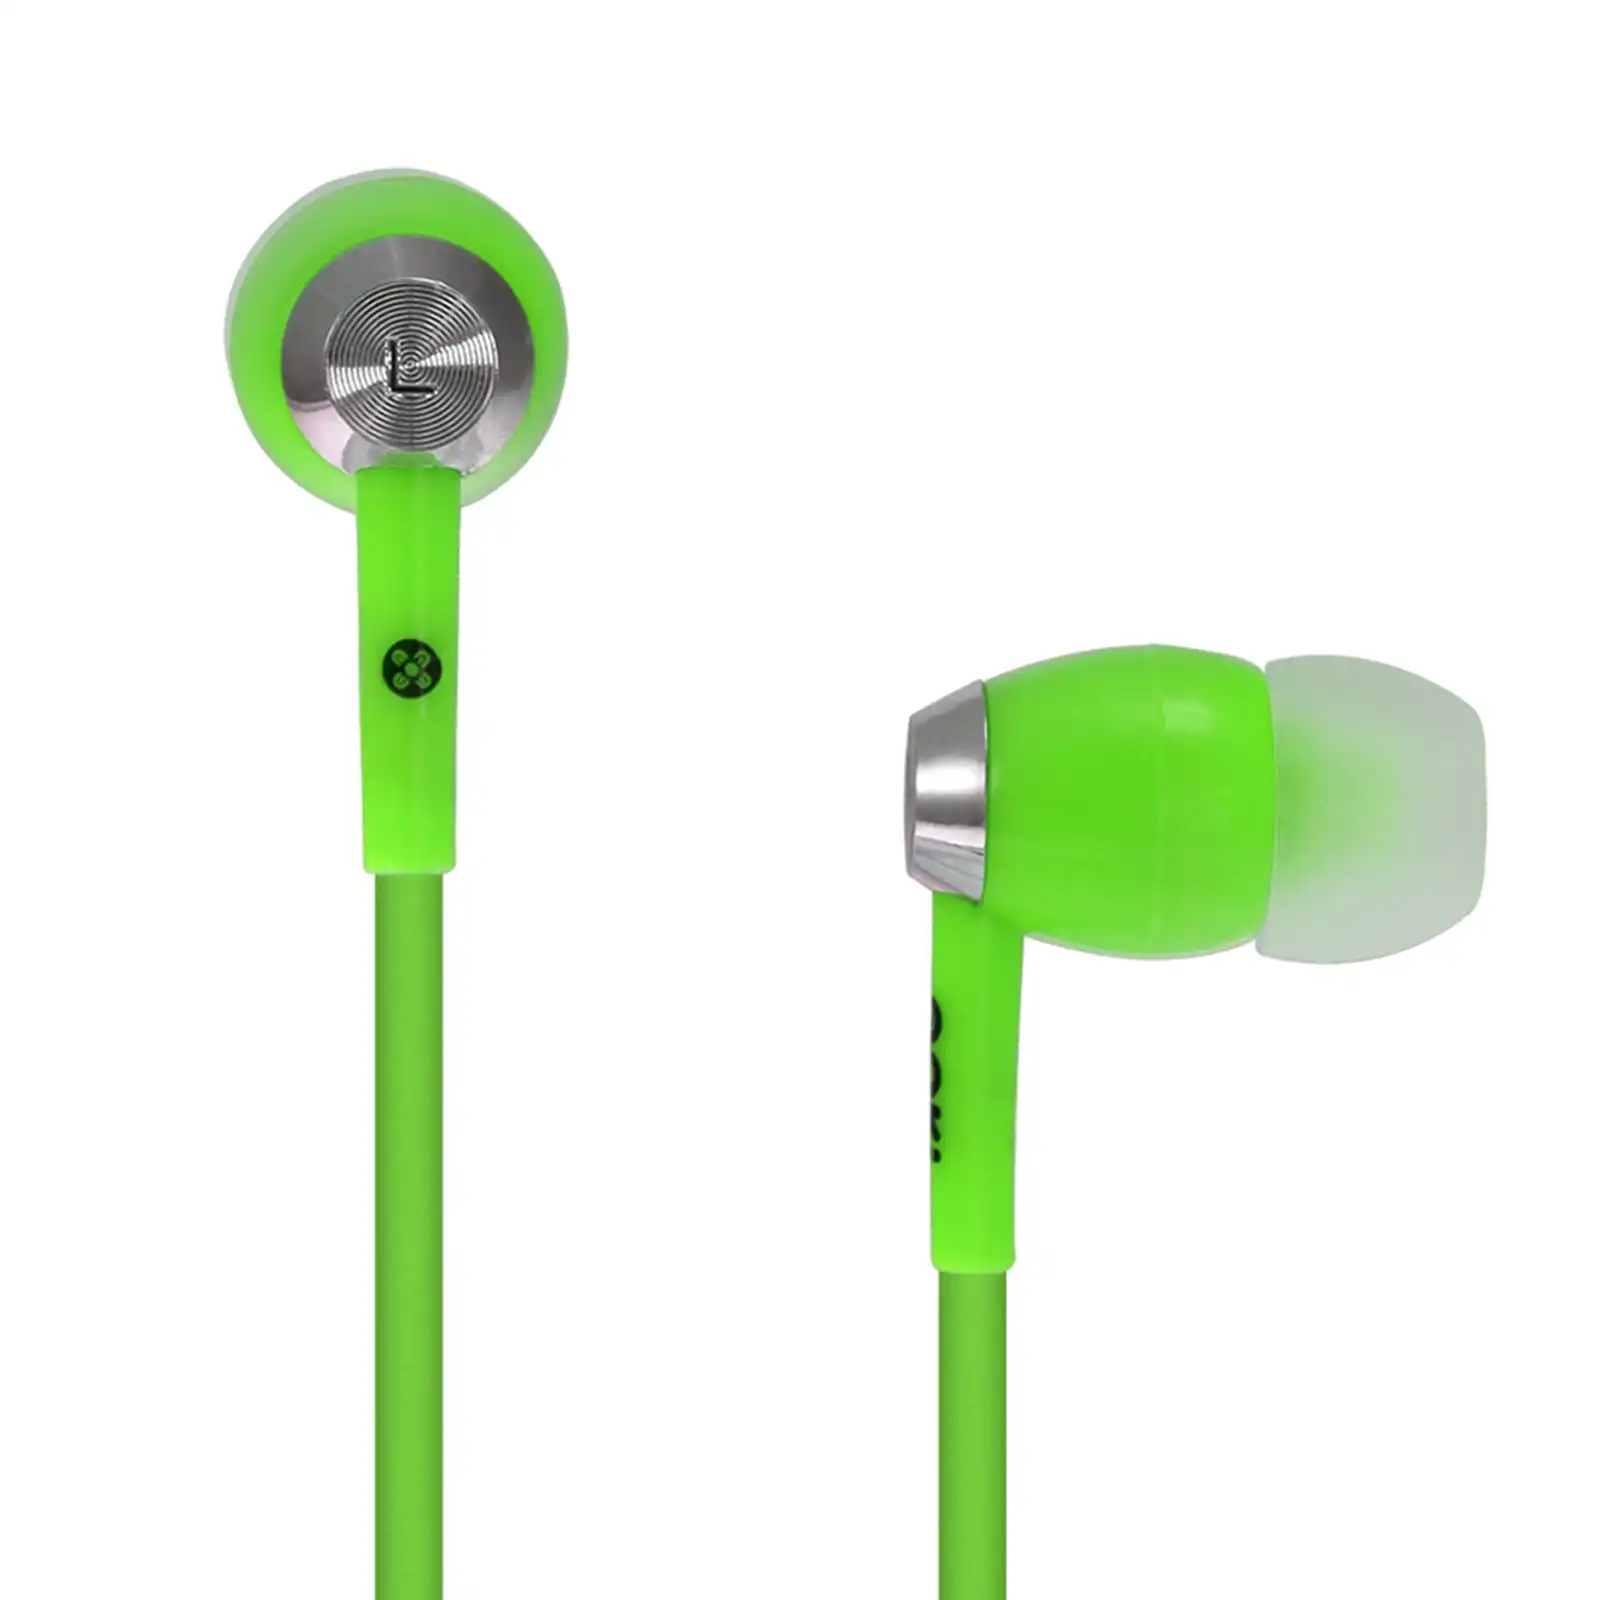 Moki Noise Isolation Hyperbuds Headphones 3.5mm Earphones for iPhone/Android GRN